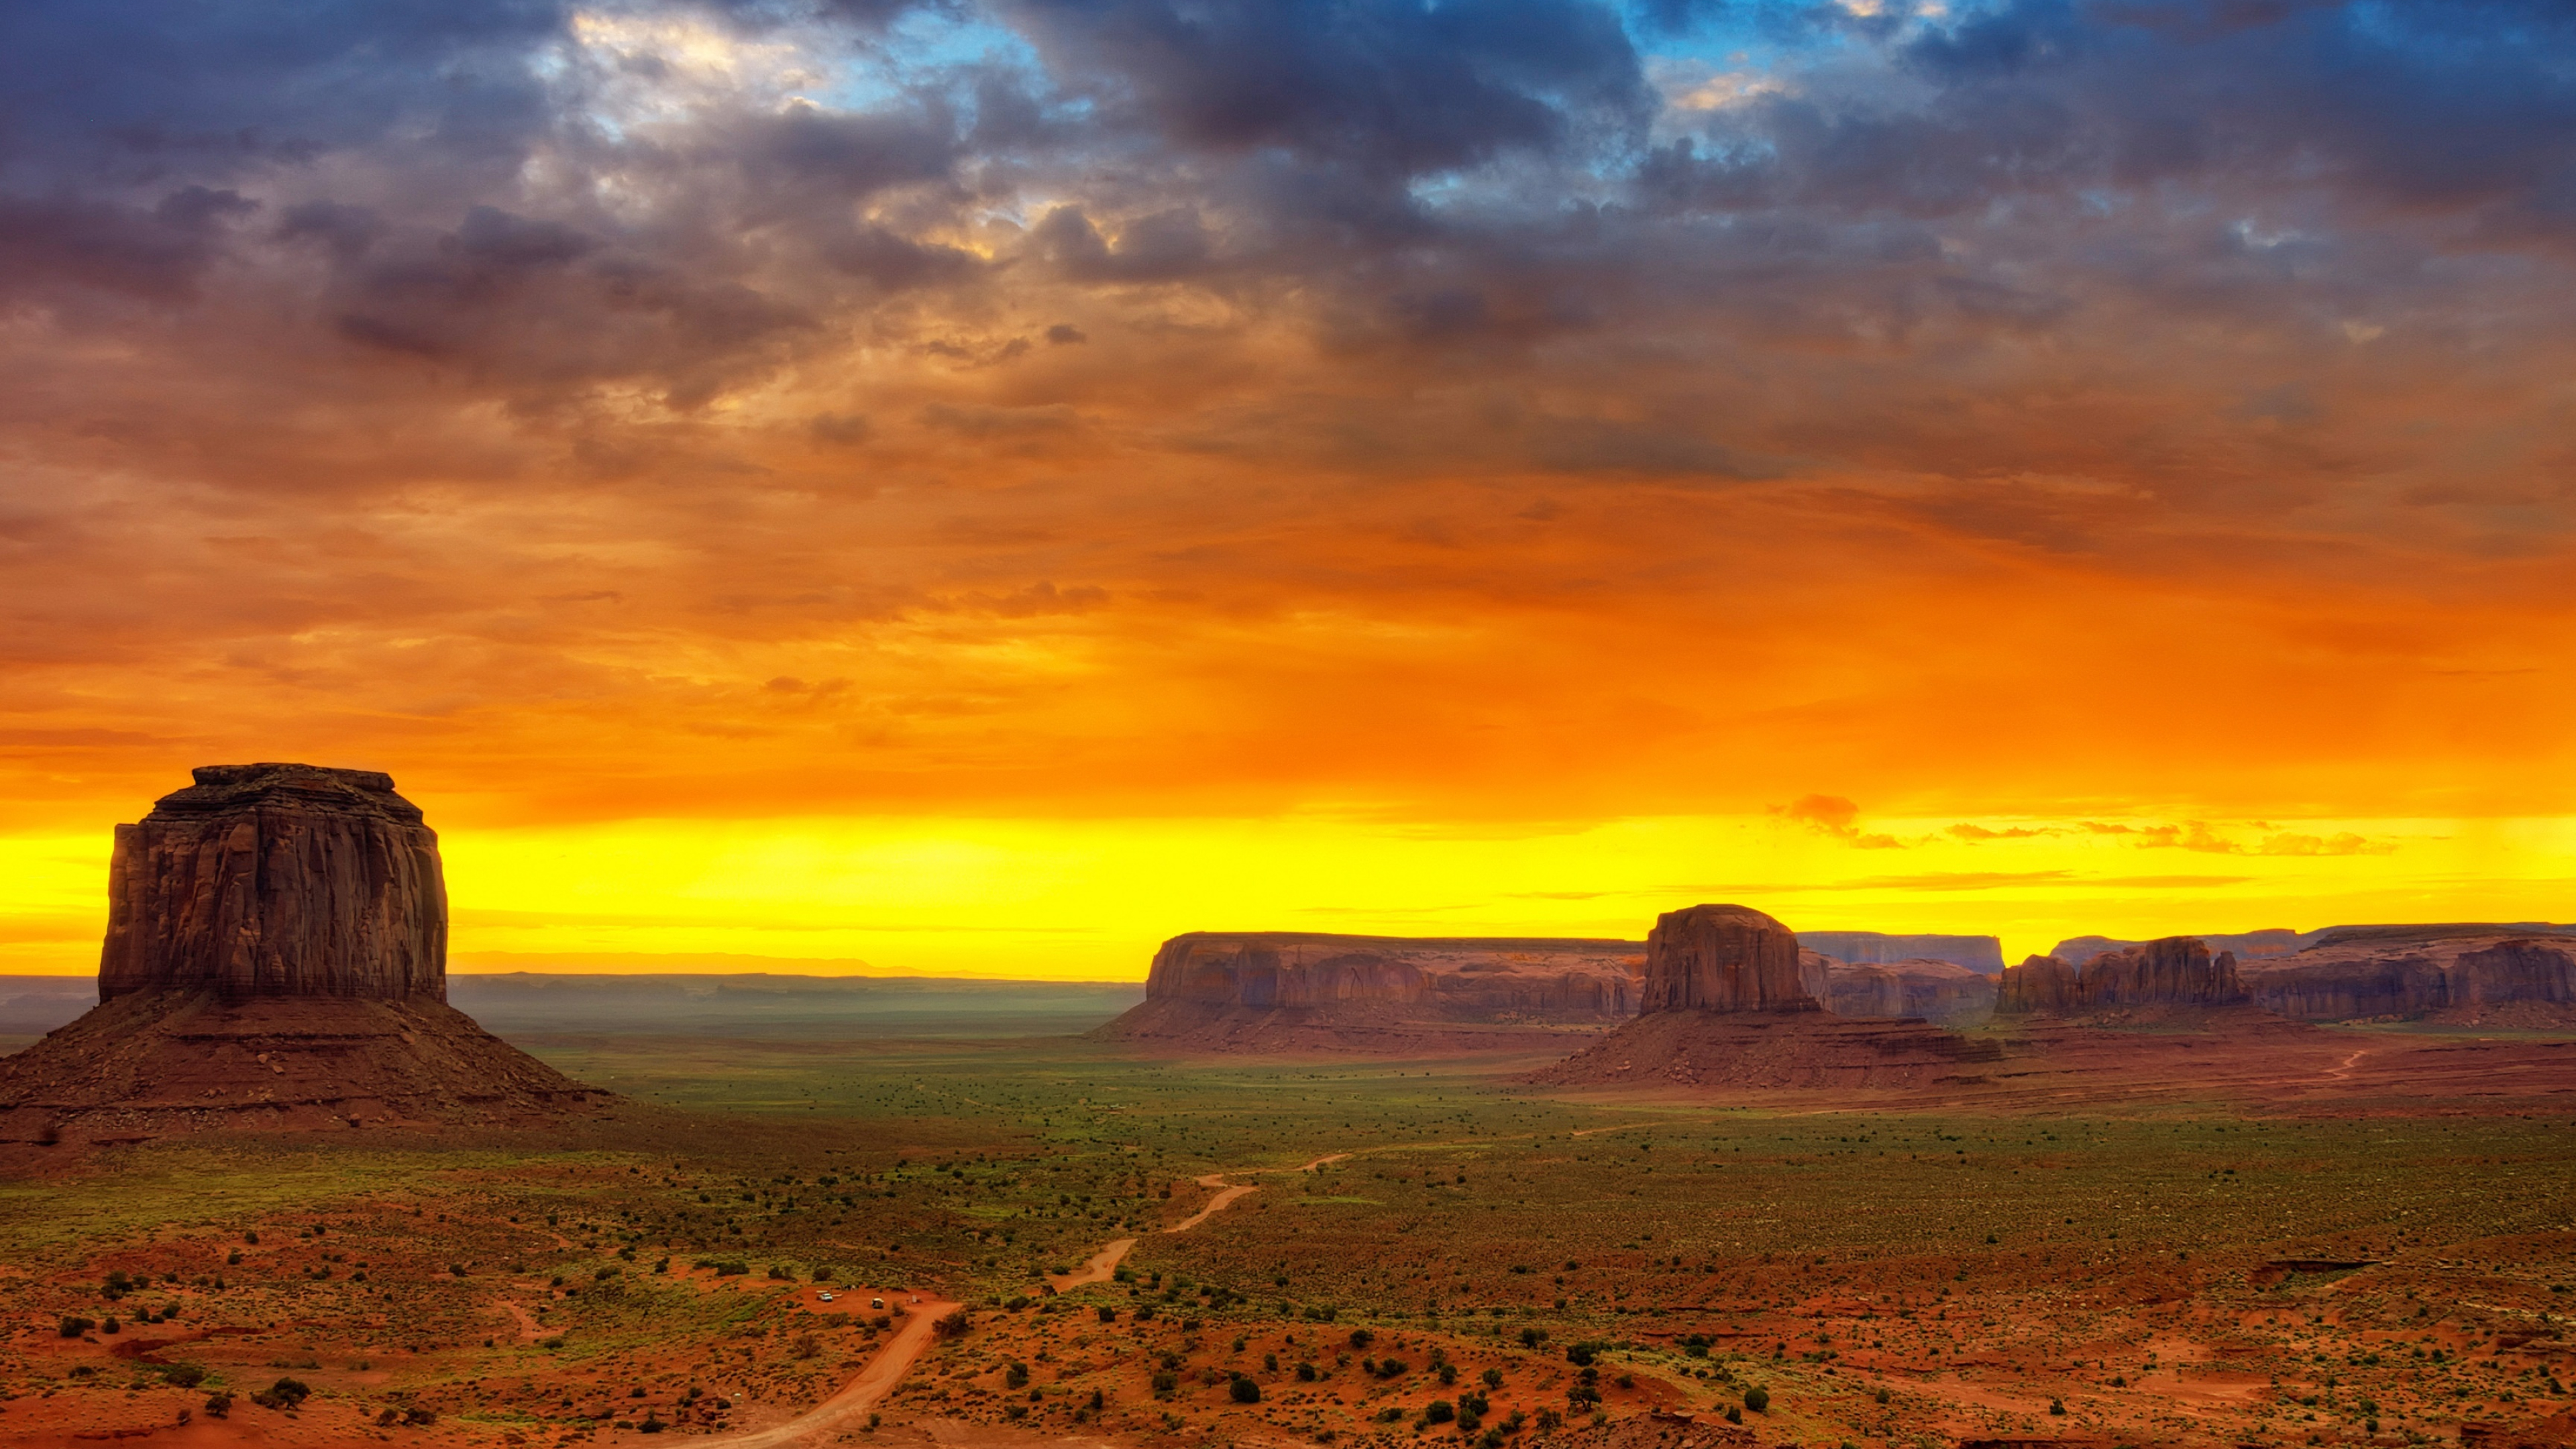 8K Monument Valley wallpapers, Top free backgrounds, High-resolution landscapes, Desert solitude, 3840x2160 4K Desktop